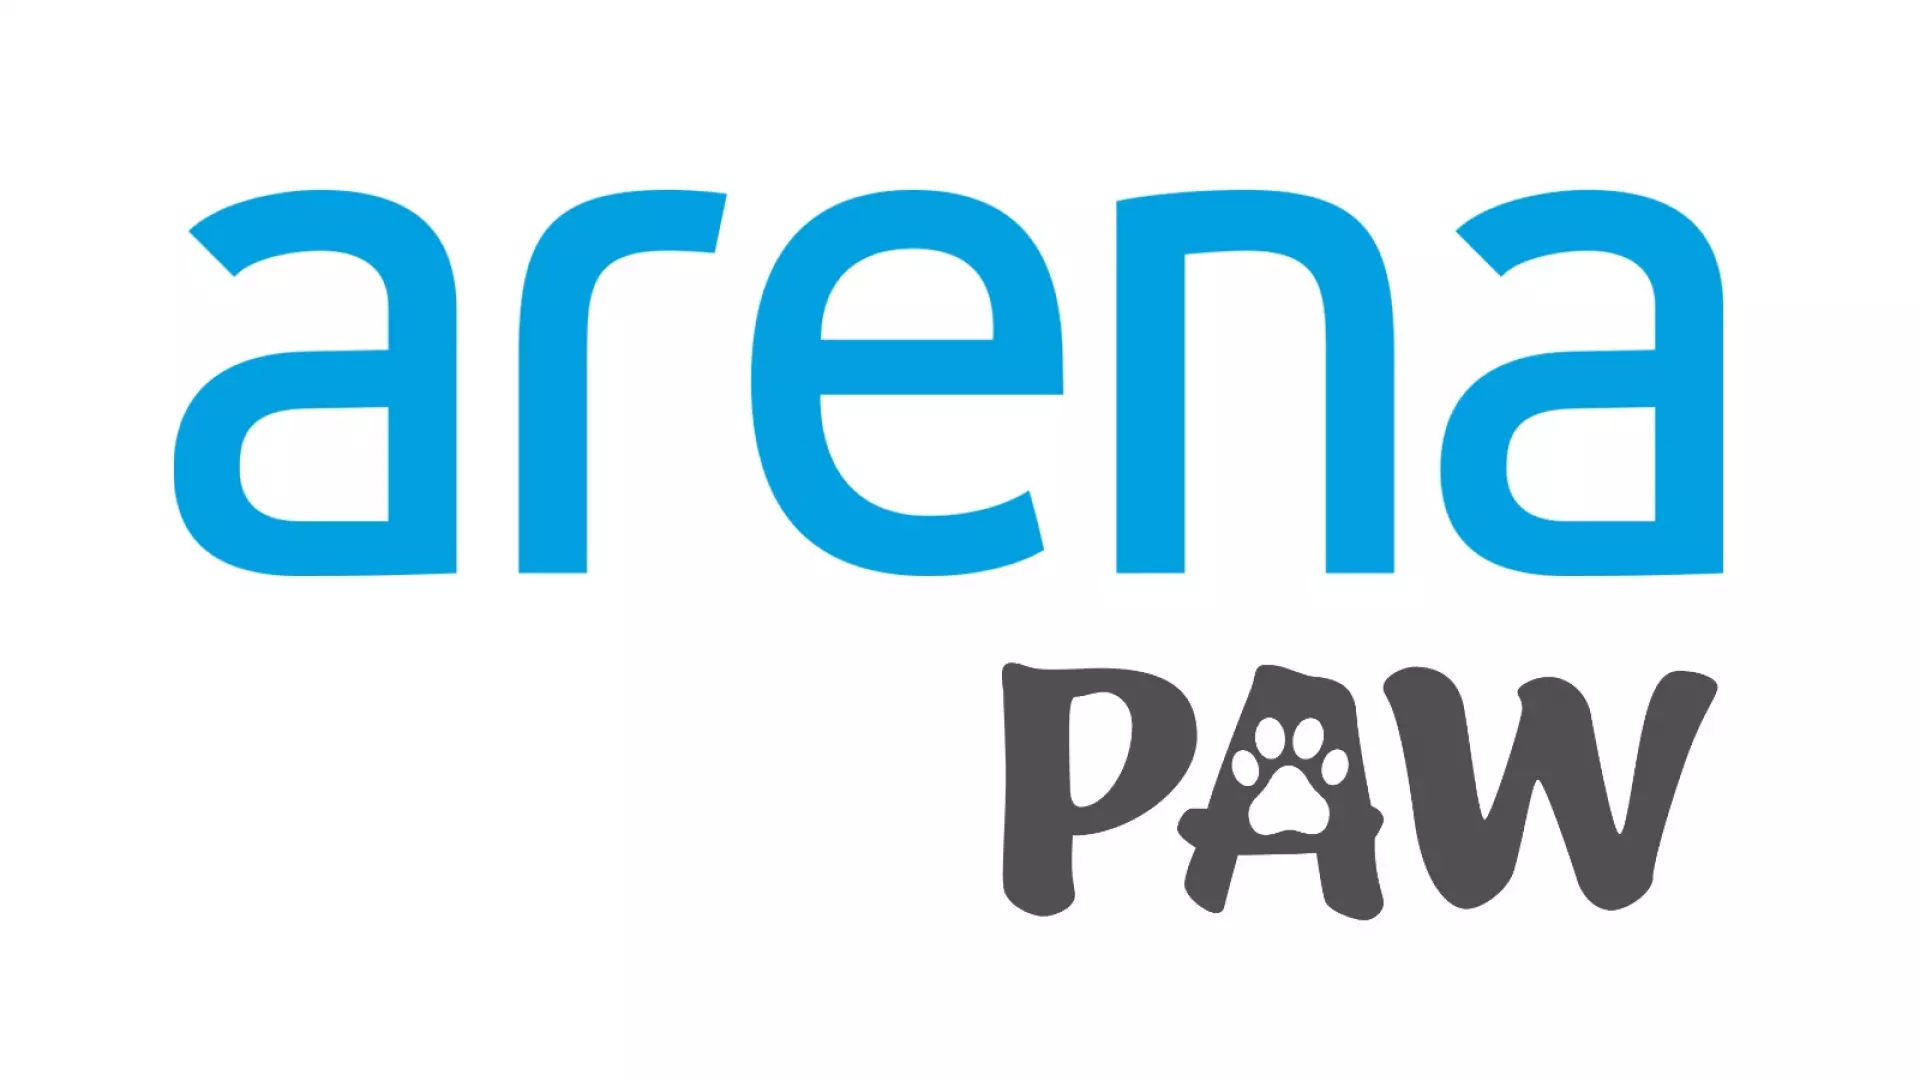 ArenaPaw